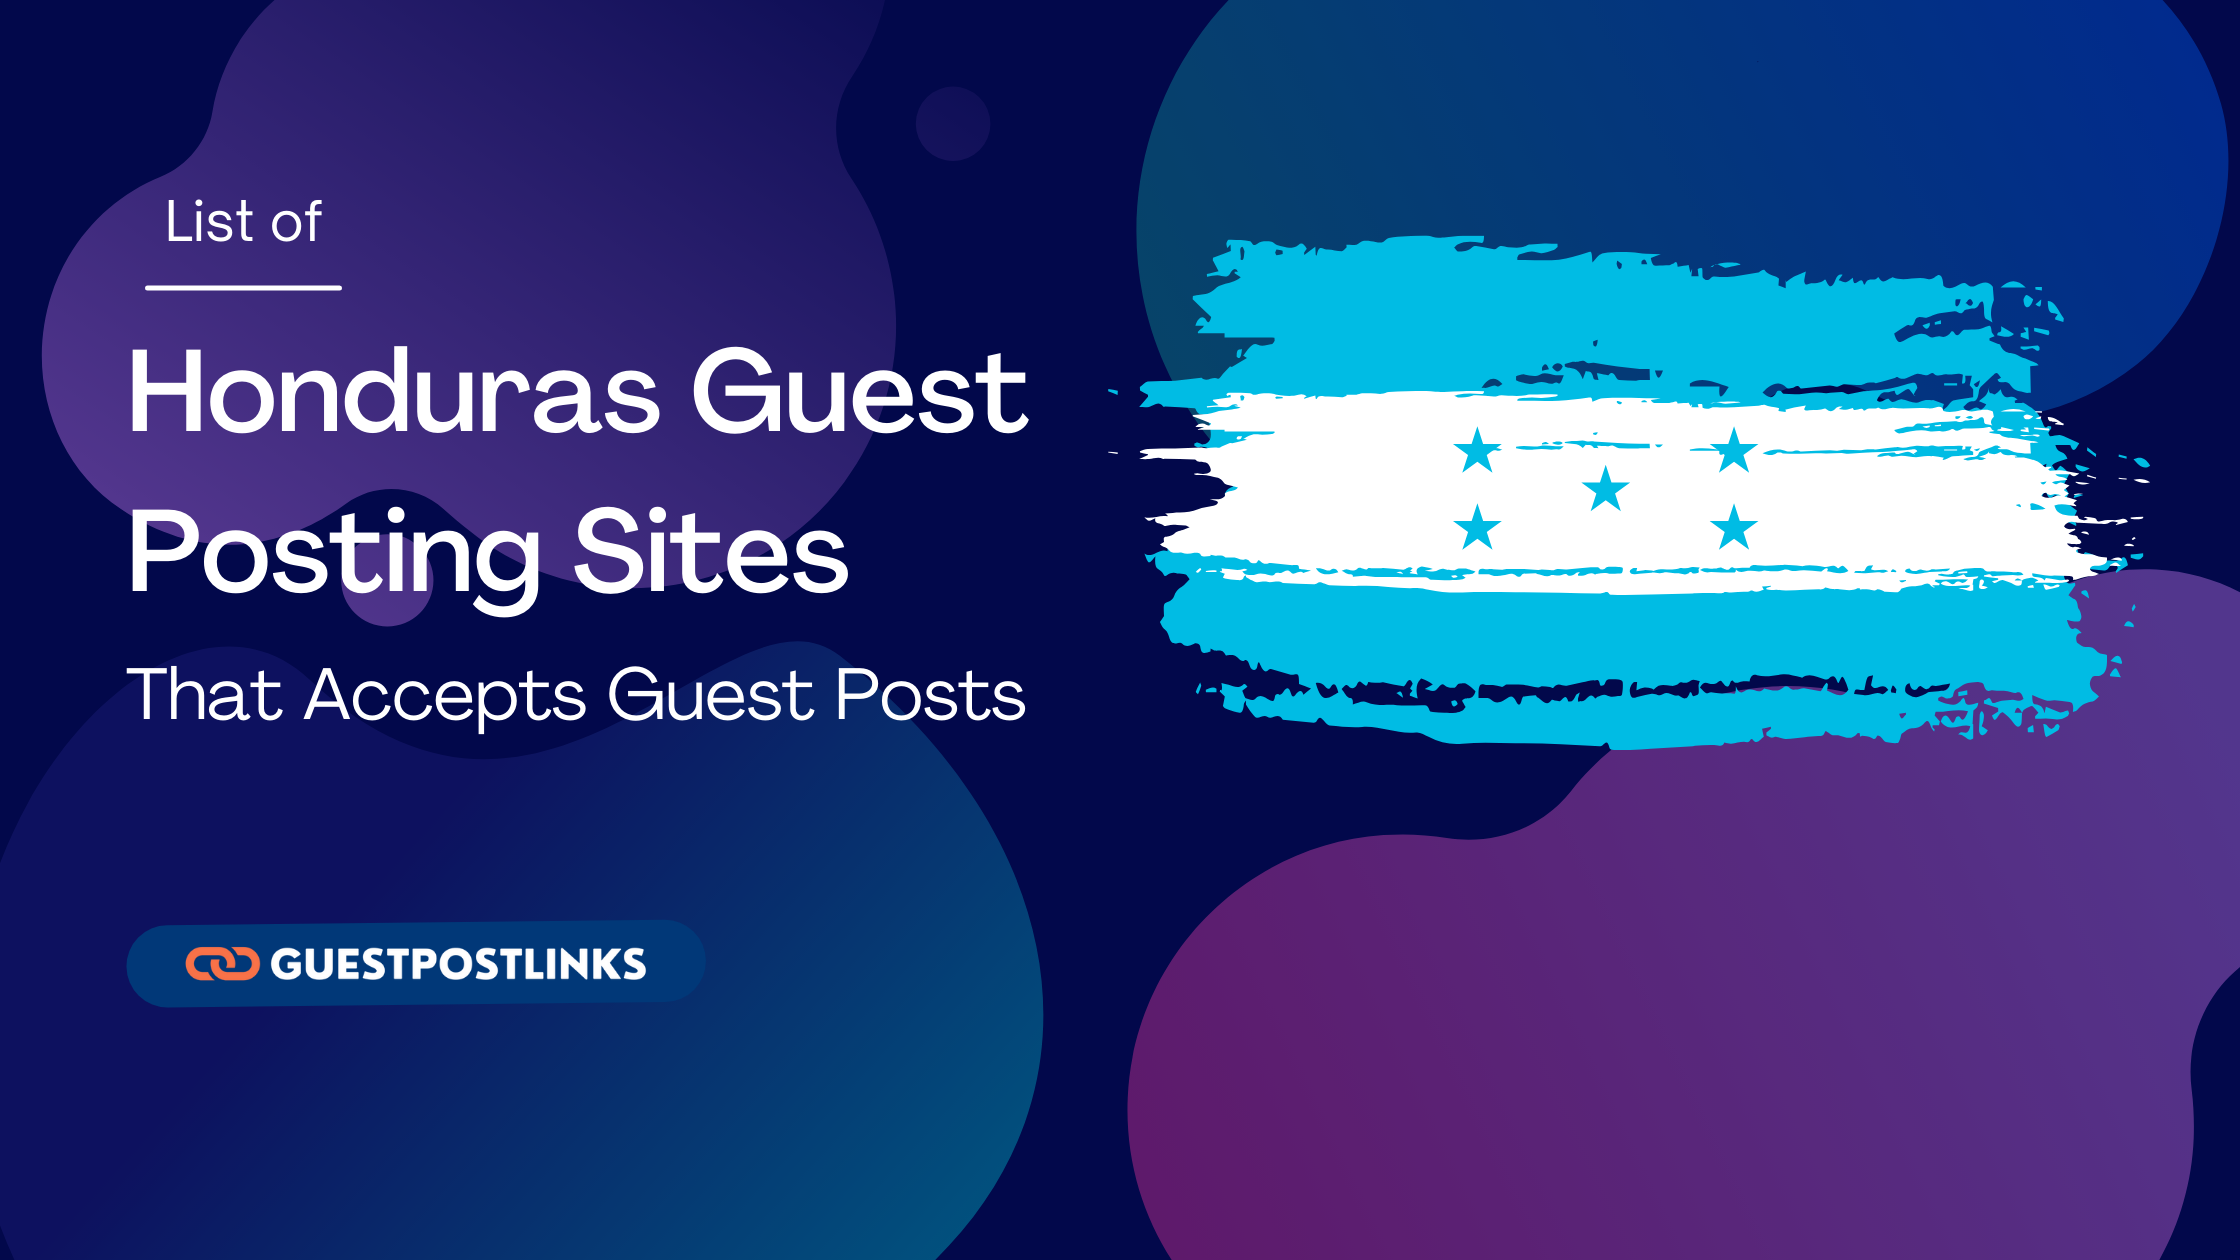 Honduras Guest Posting Sites List